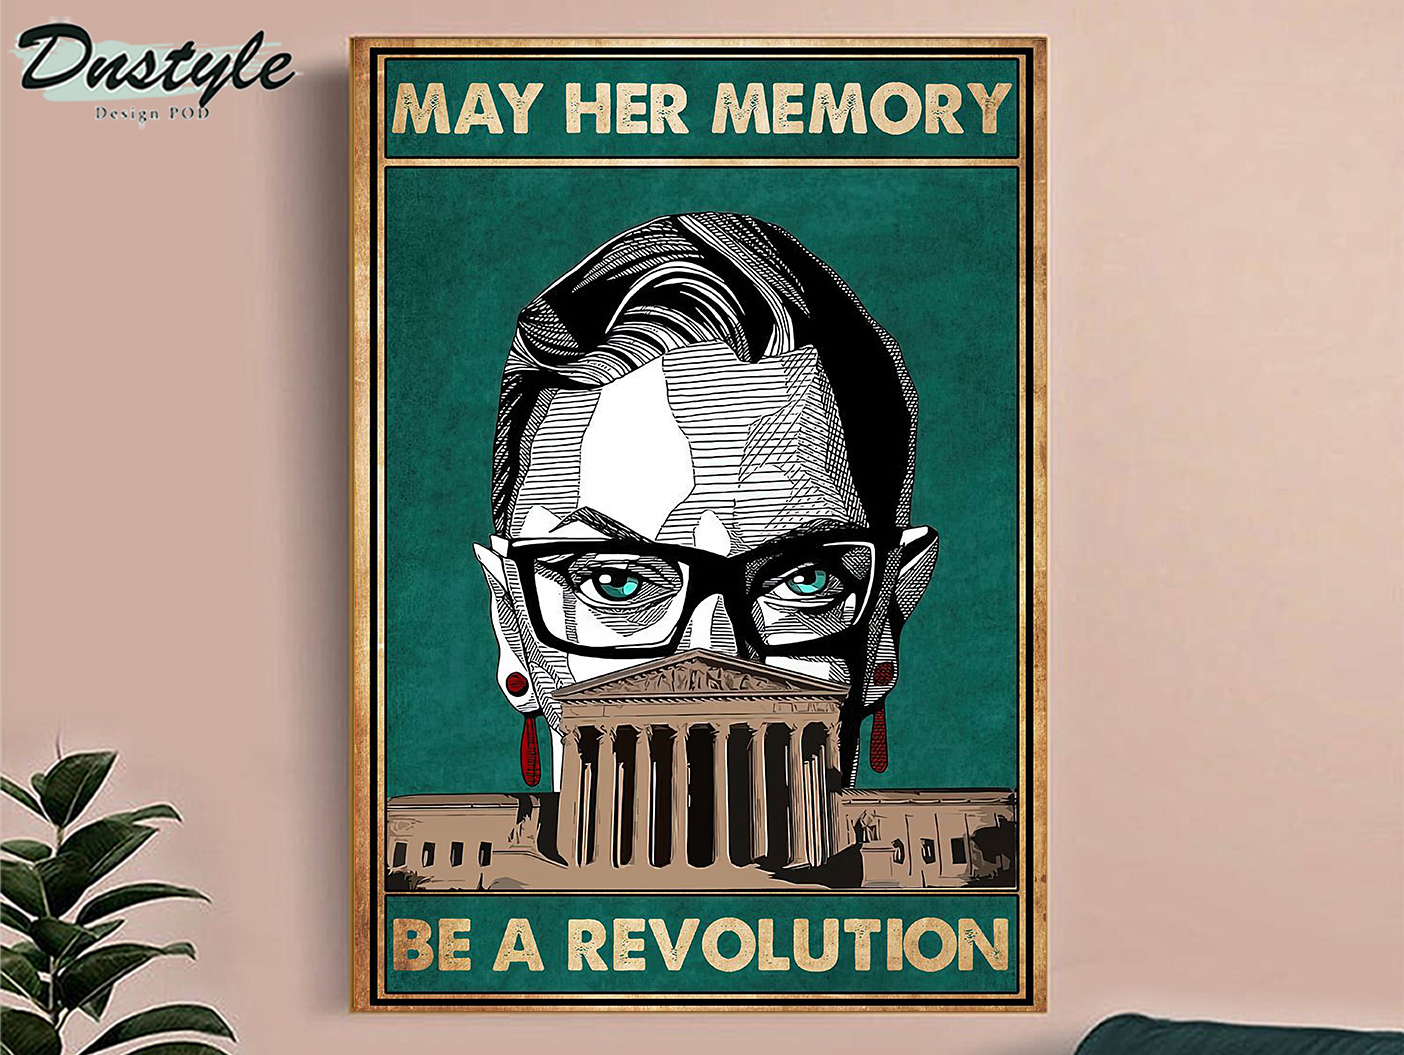 Ruth bader ginsburg may her memory be a revolution poster